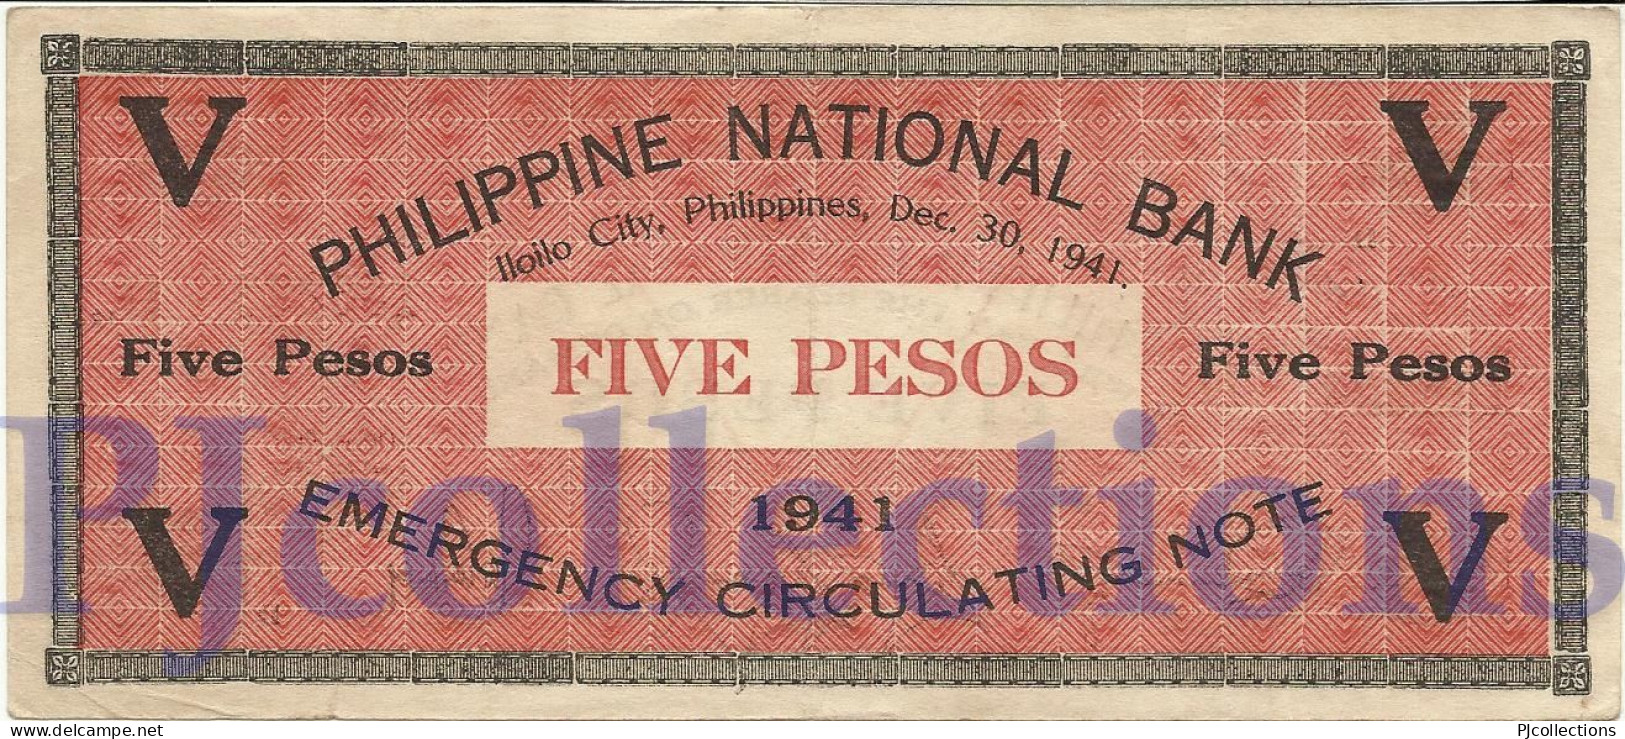 PHILIPPINES 5 PESOS 1941 PICK S307 AU W/GRAFFITI EMERGENCY BANKNOTE - Filipinas